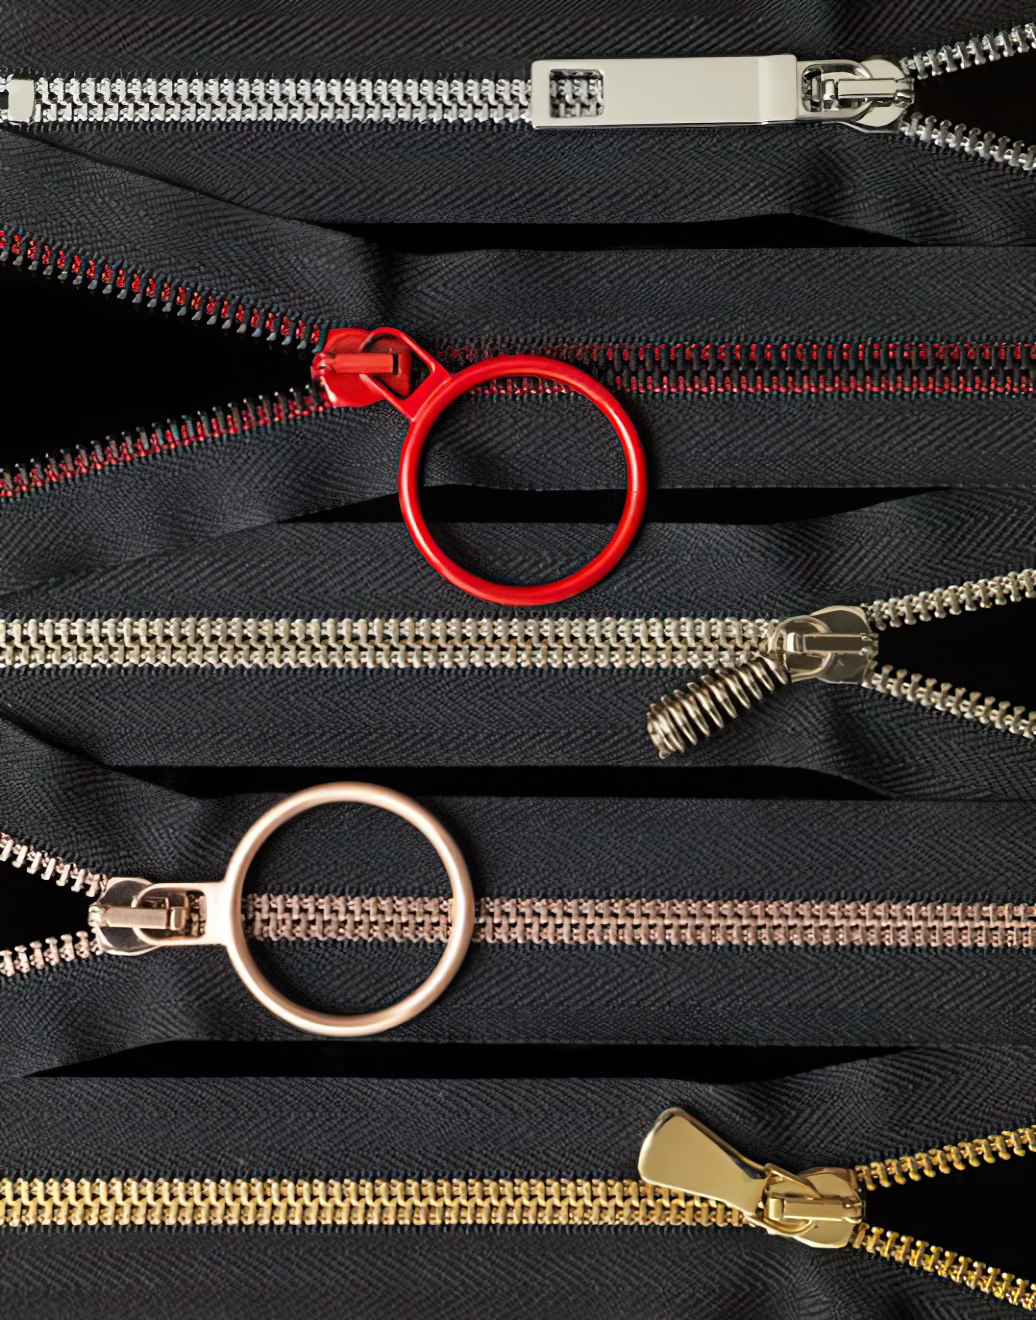 The Best Zipper Brands: Form & Function Combined